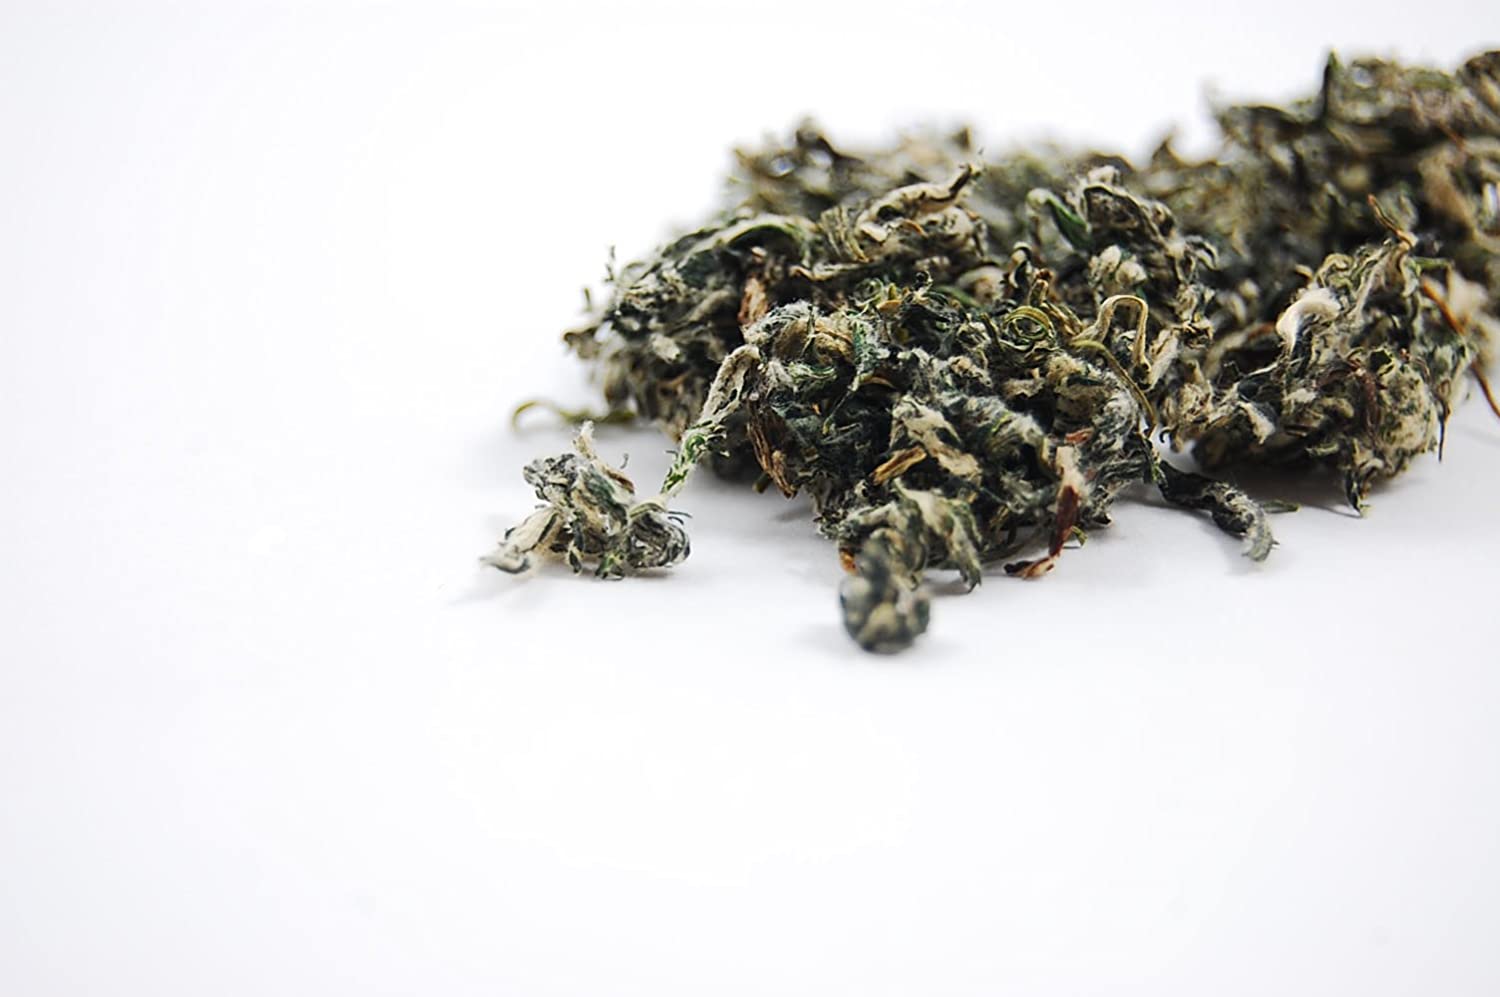 SSANGGYE Mugwort Tea 30g Korea health supplements herbal Foods